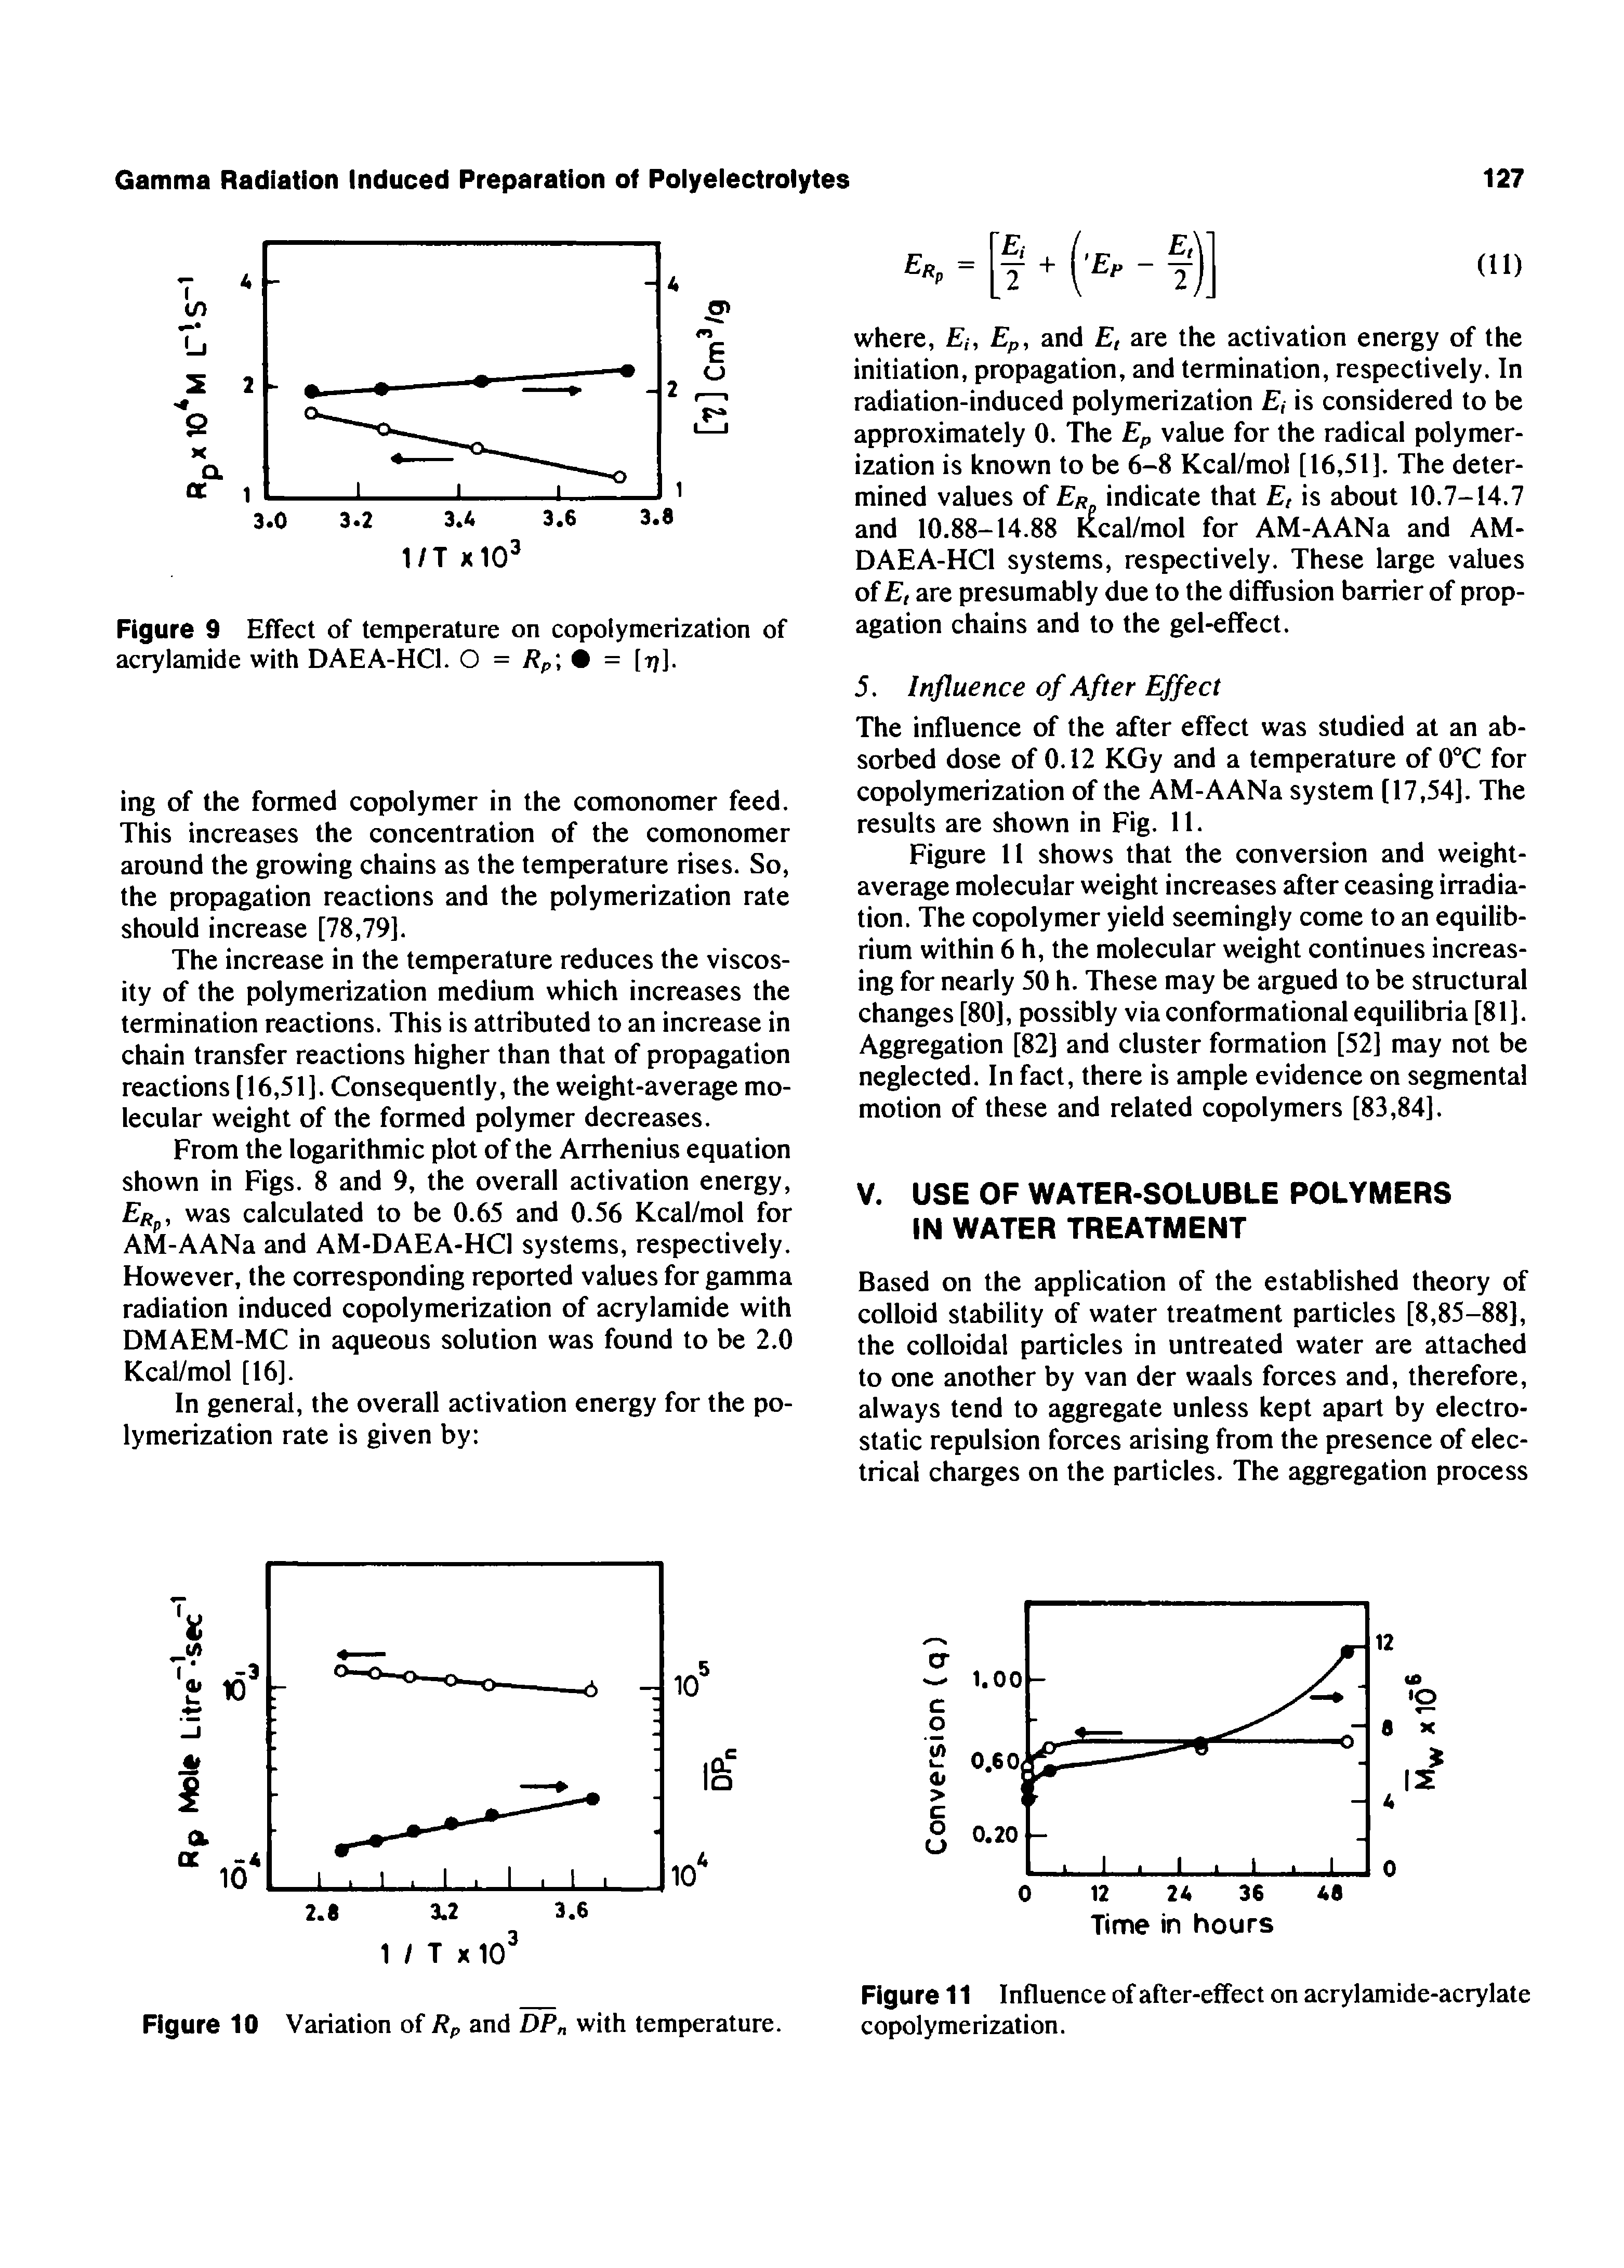 Figure 11 Influence of after-effect on acrylamide-acrylate copolymerization.